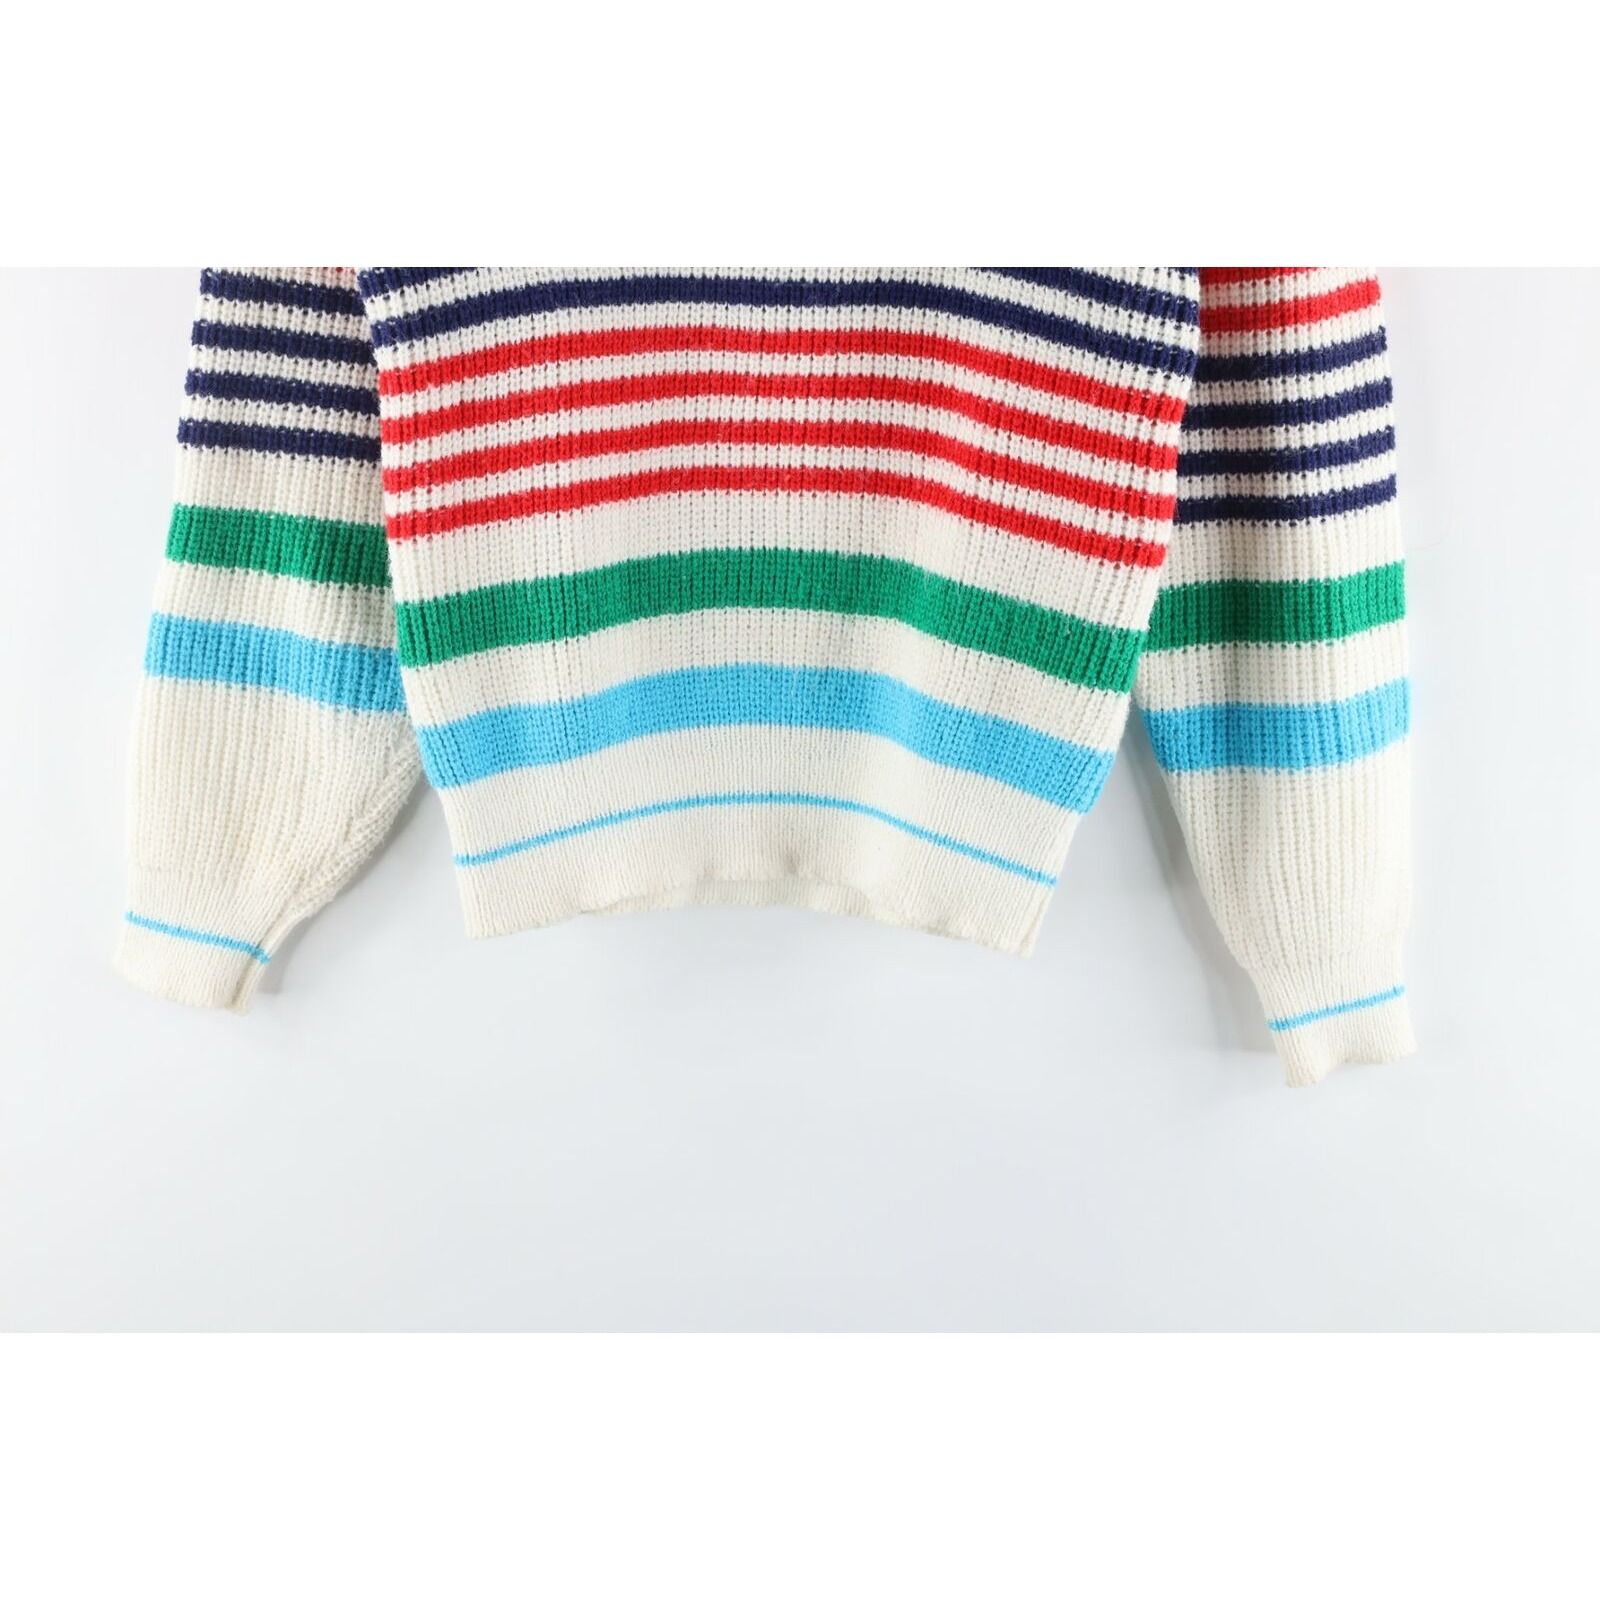 Vintage Vintage 70s Rockabilly Medium Rainbow Striped Knit Sweater Size M / US 6-8 / IT 42-44 - 3 Thumbnail